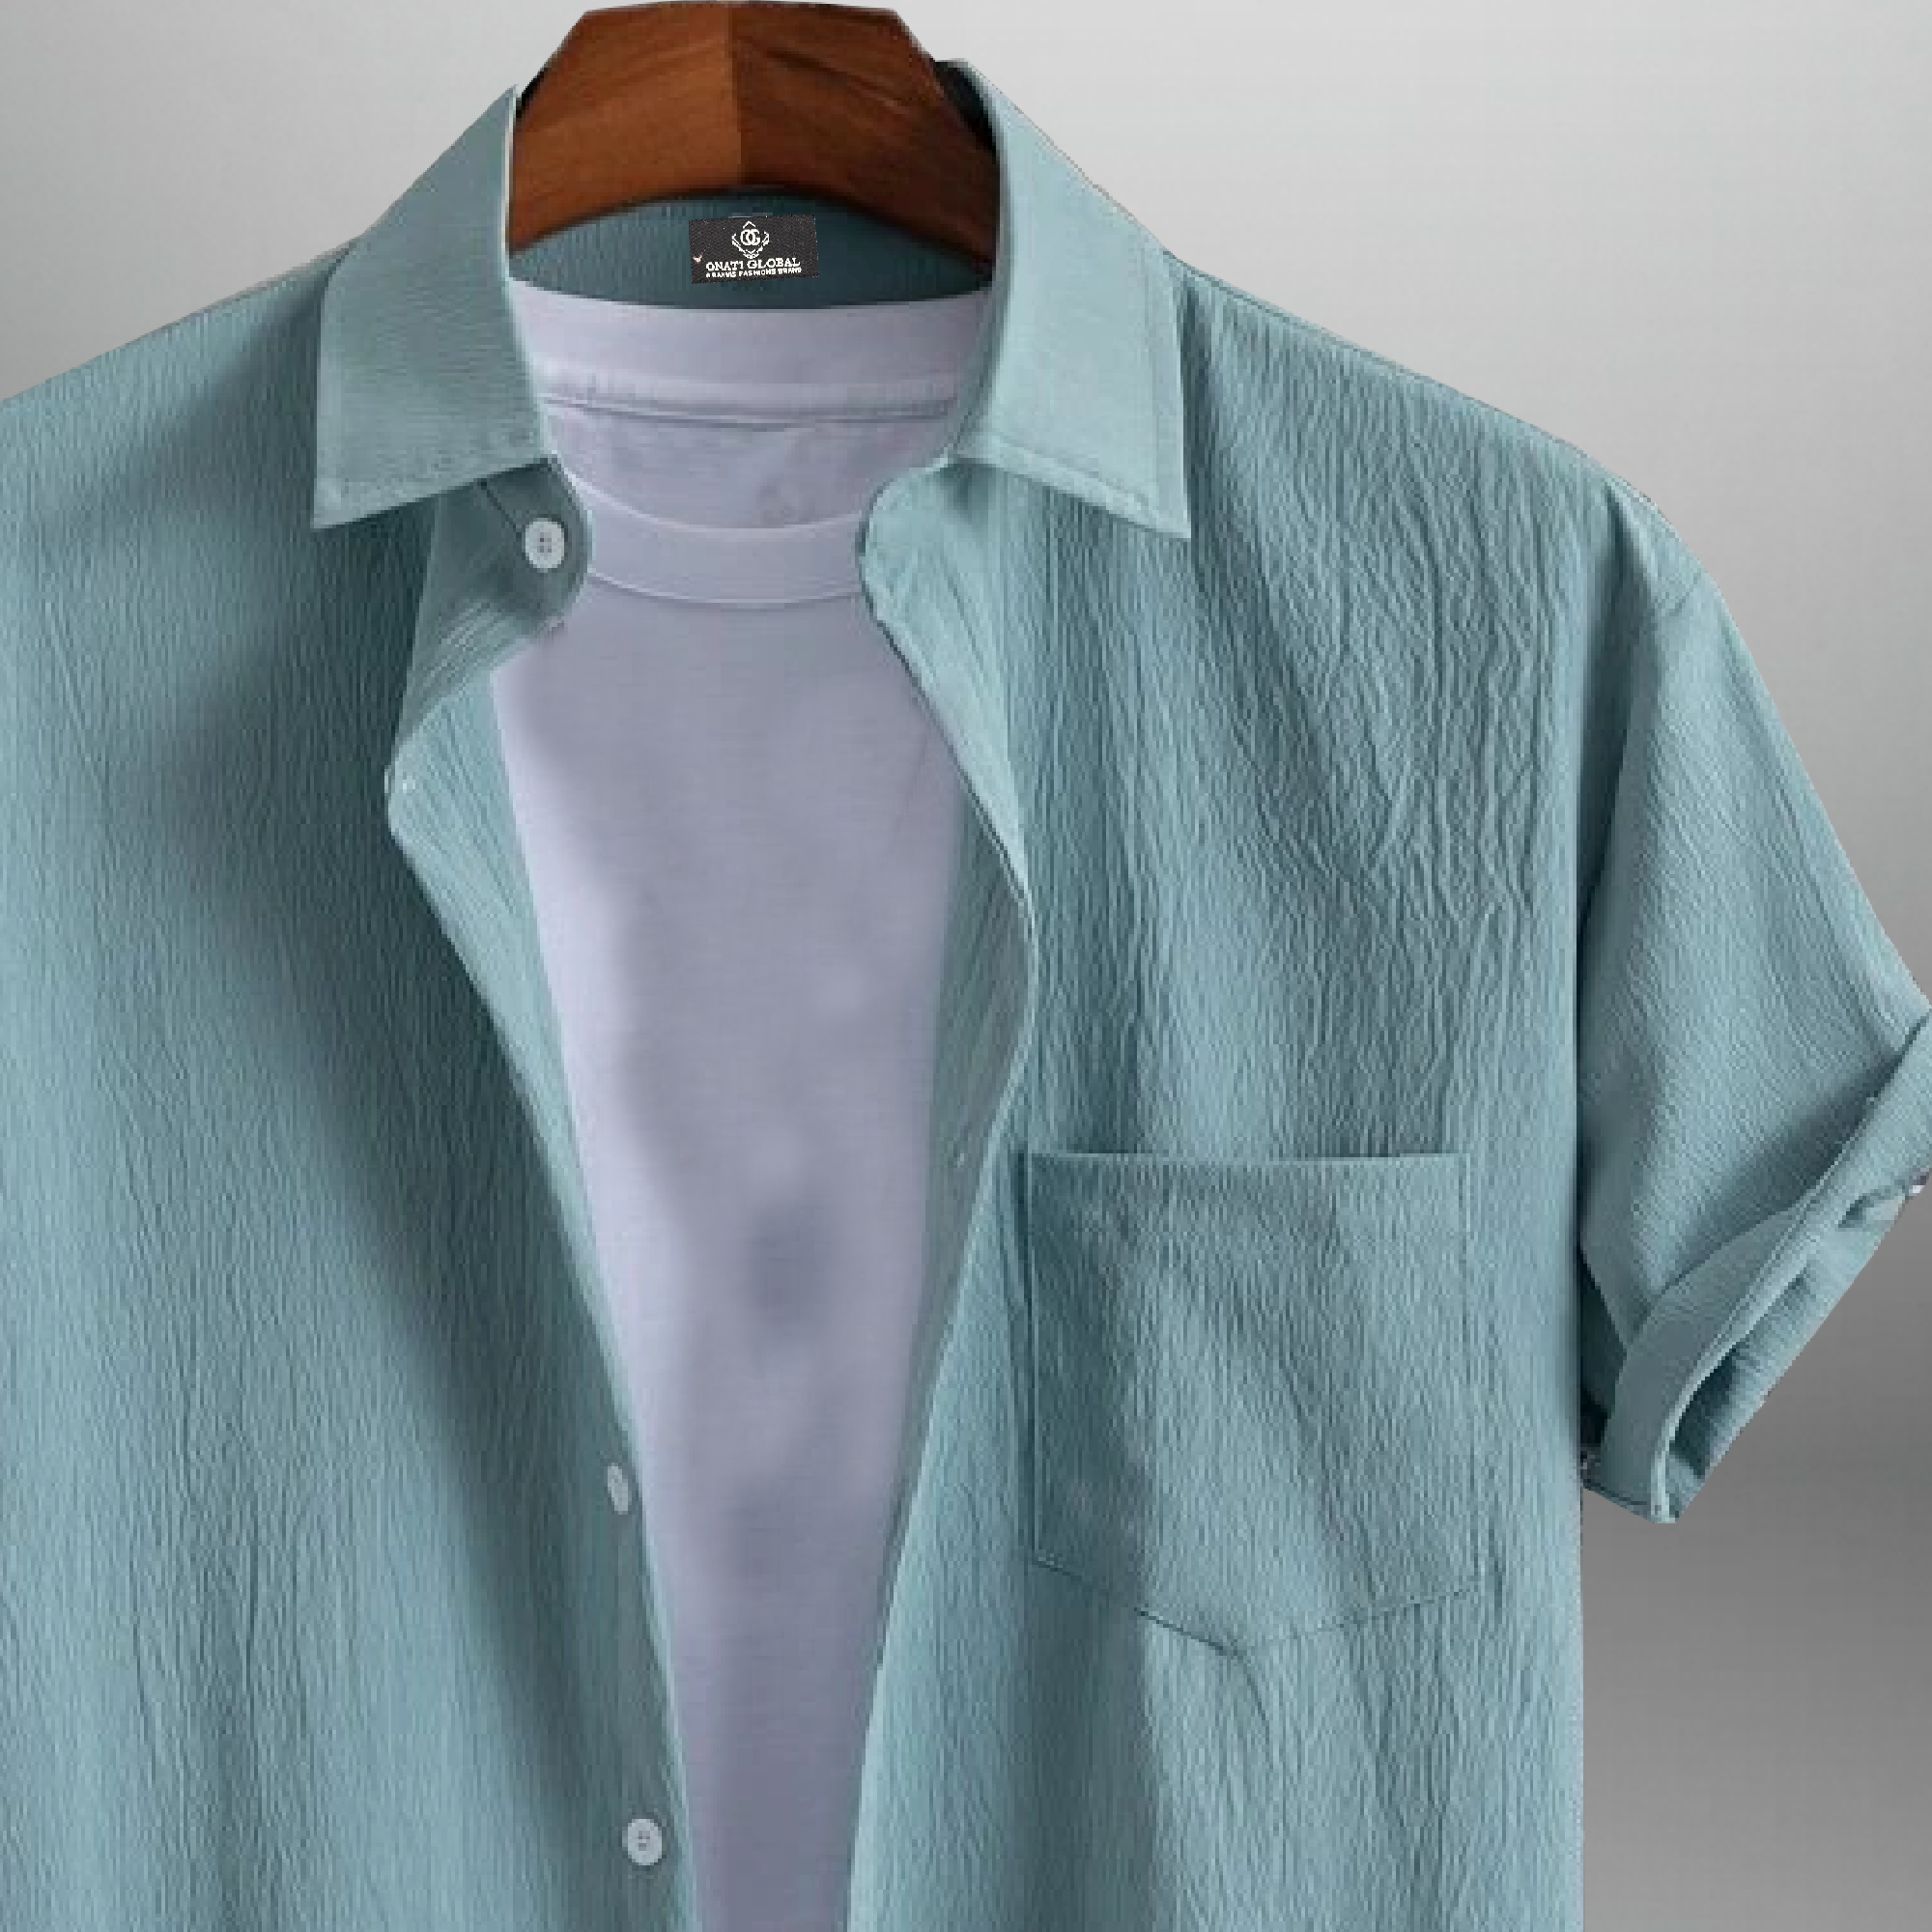 Men's Light Blue Half Sleeve Textured shirt and A Plain white T-shirt-RMS027